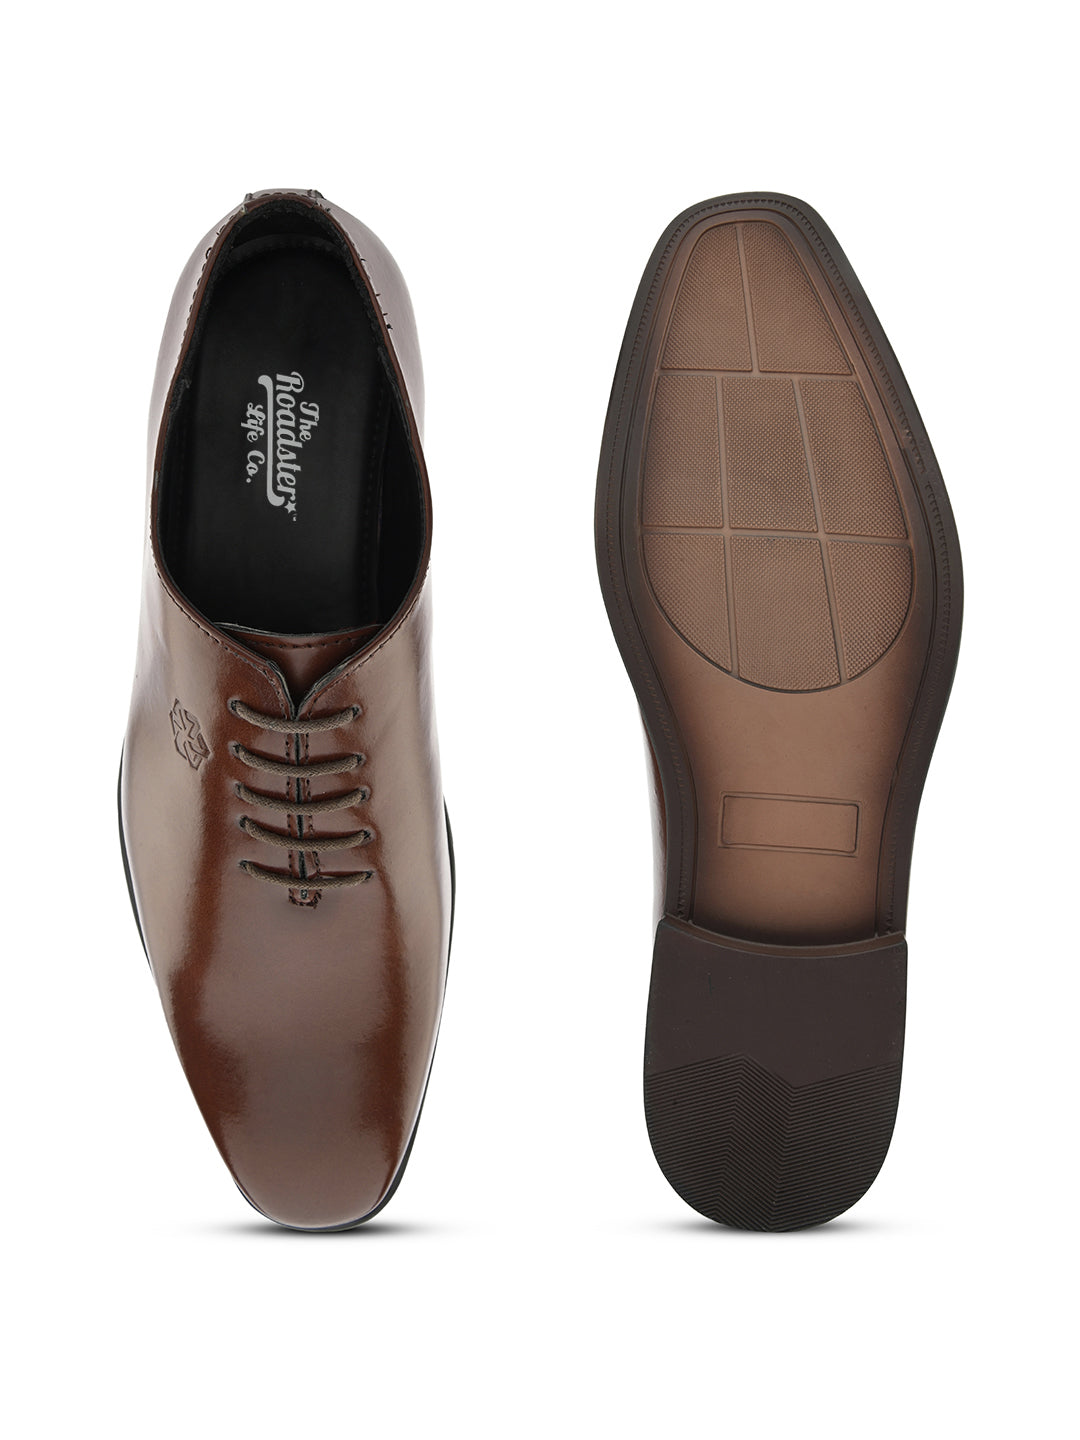 FENTACIA Men Brown Oxford Formal Shoes